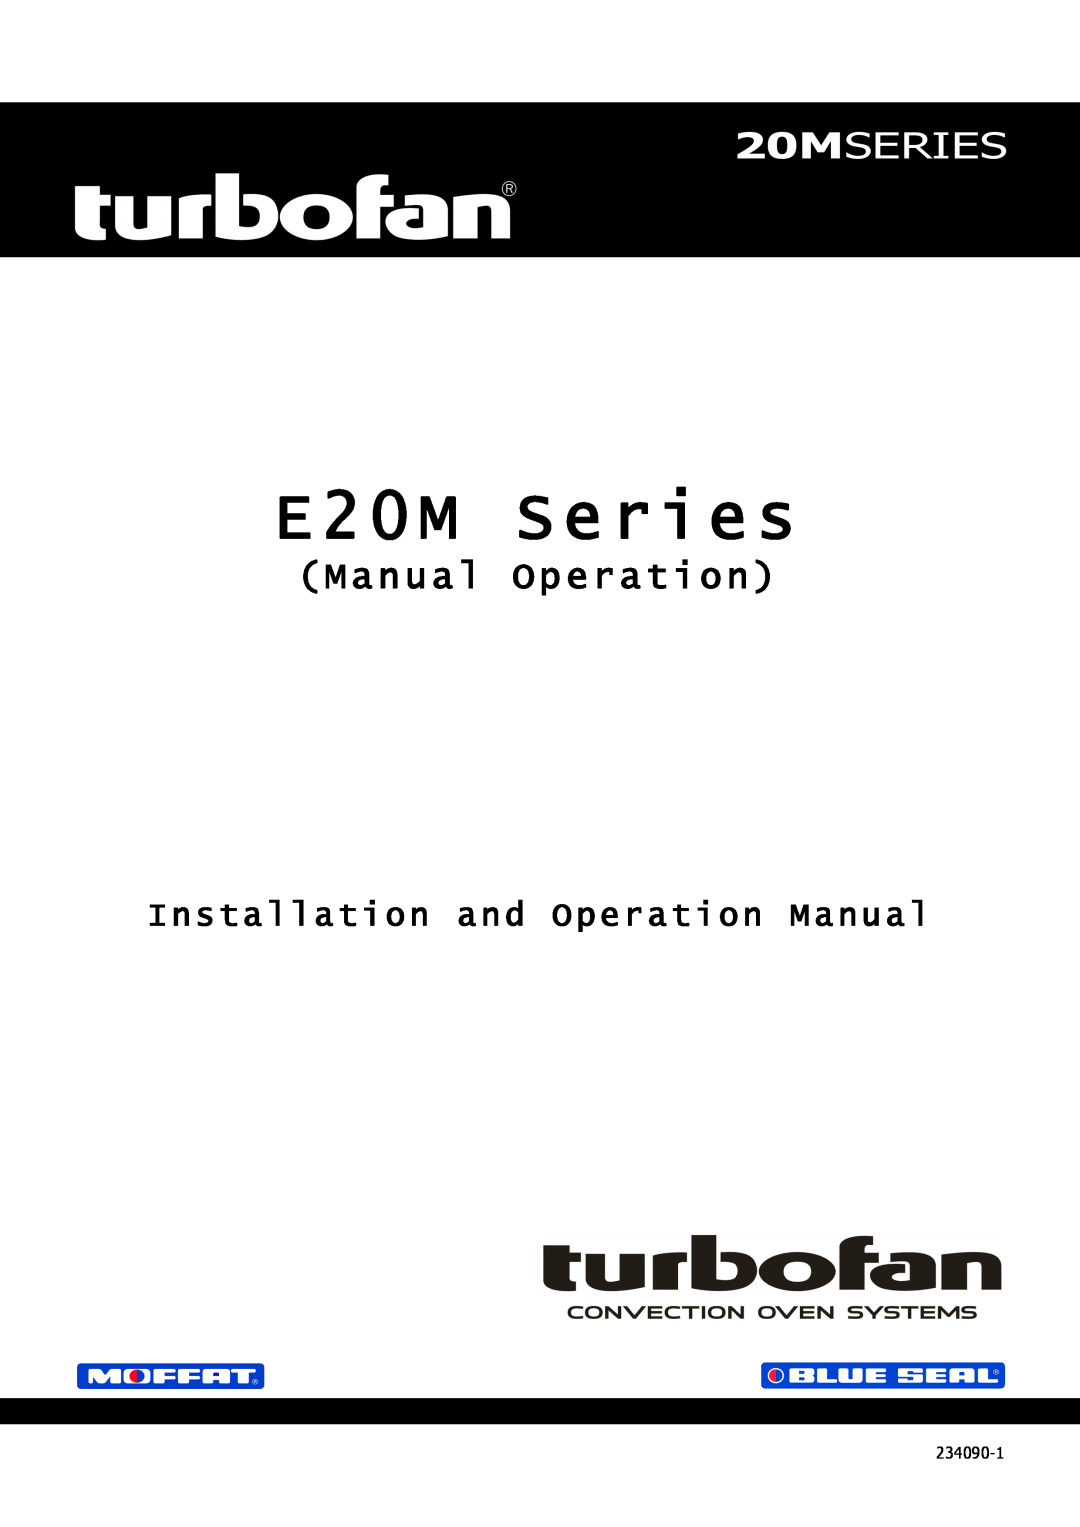 Moffat operation manual E20M Series, 220MSERIES, Manual Operation 